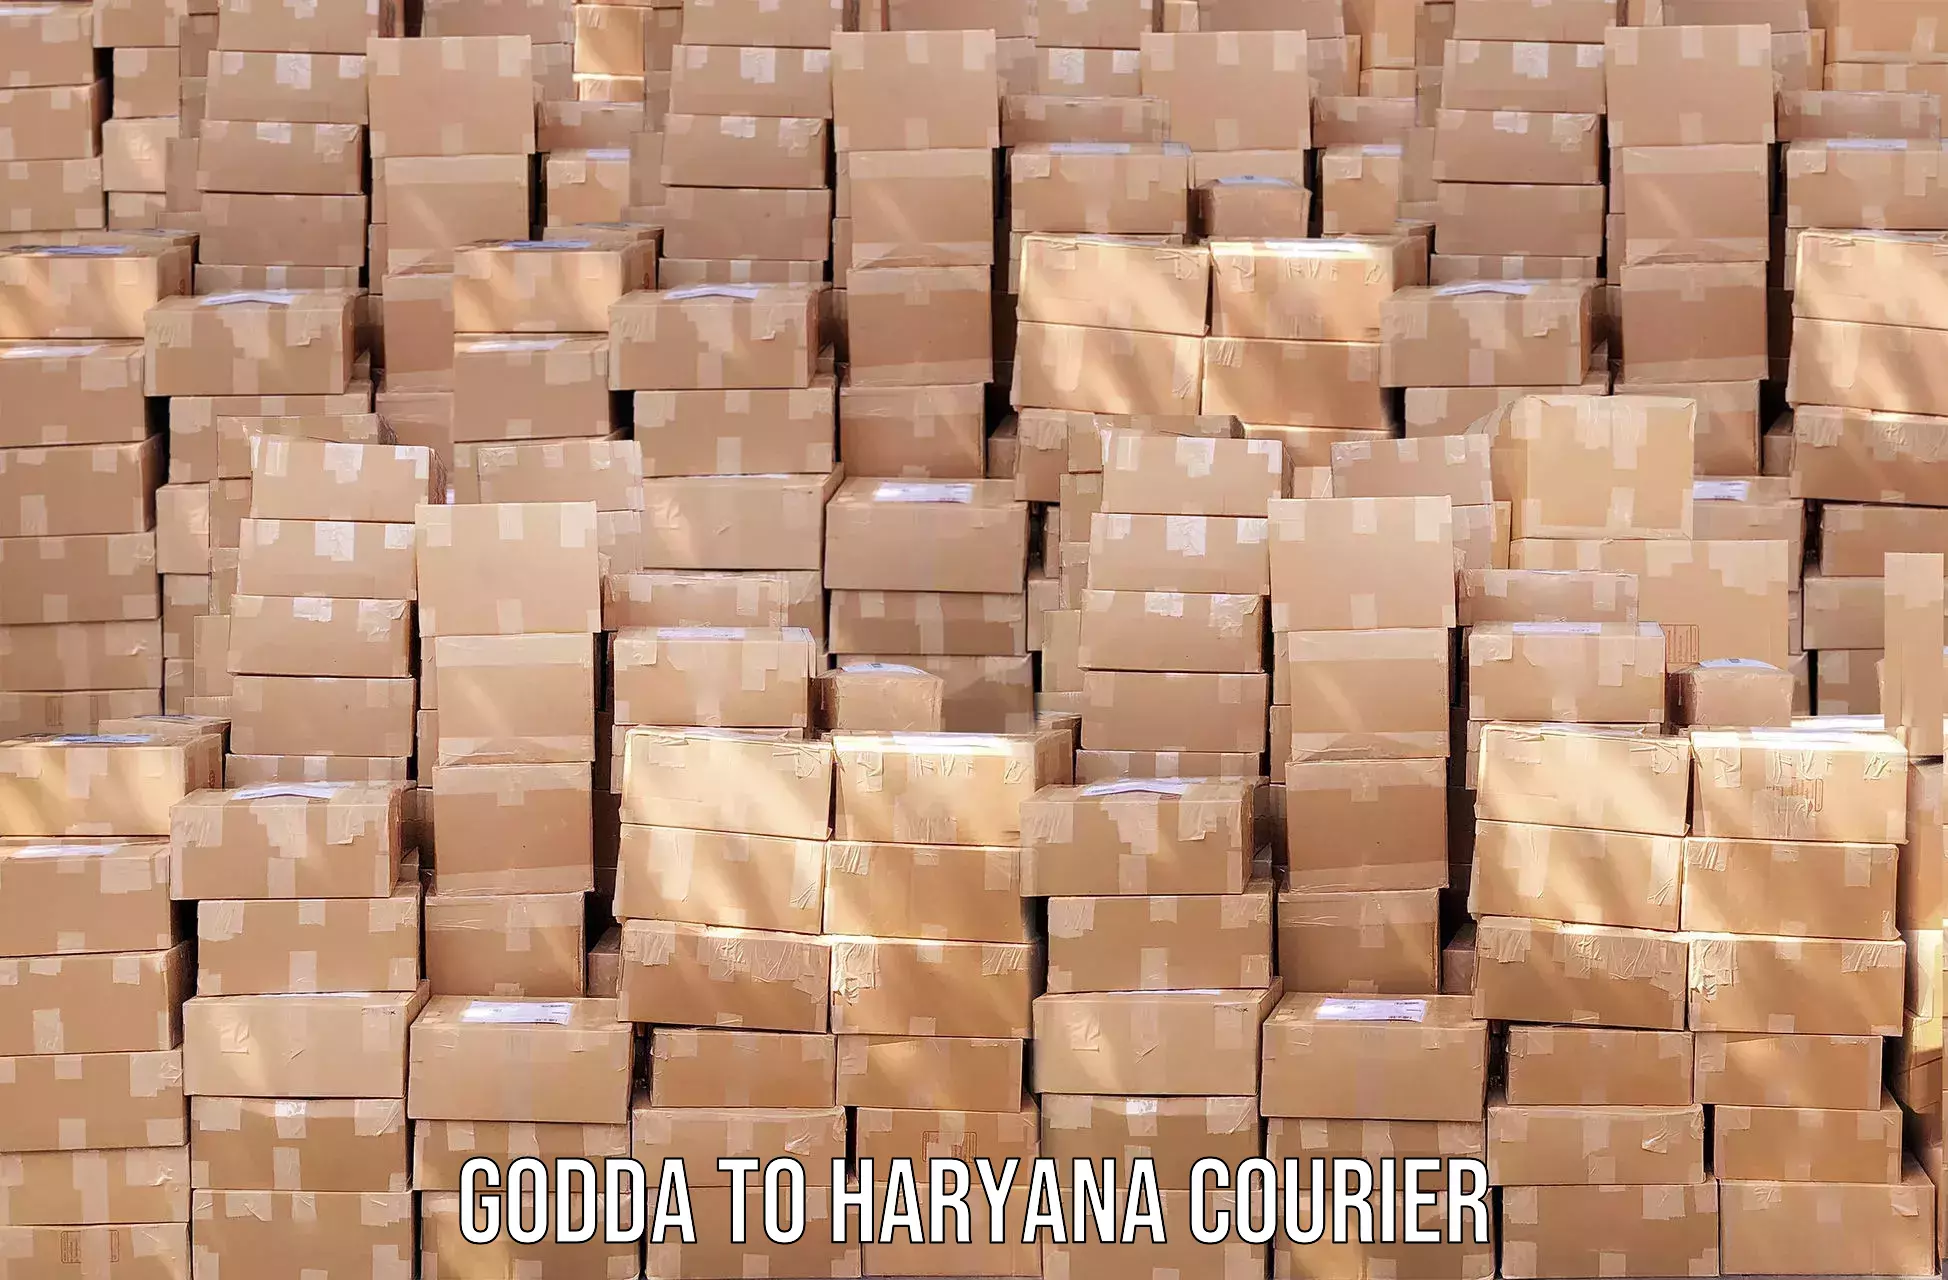 High-speed parcel service Godda to Haryana